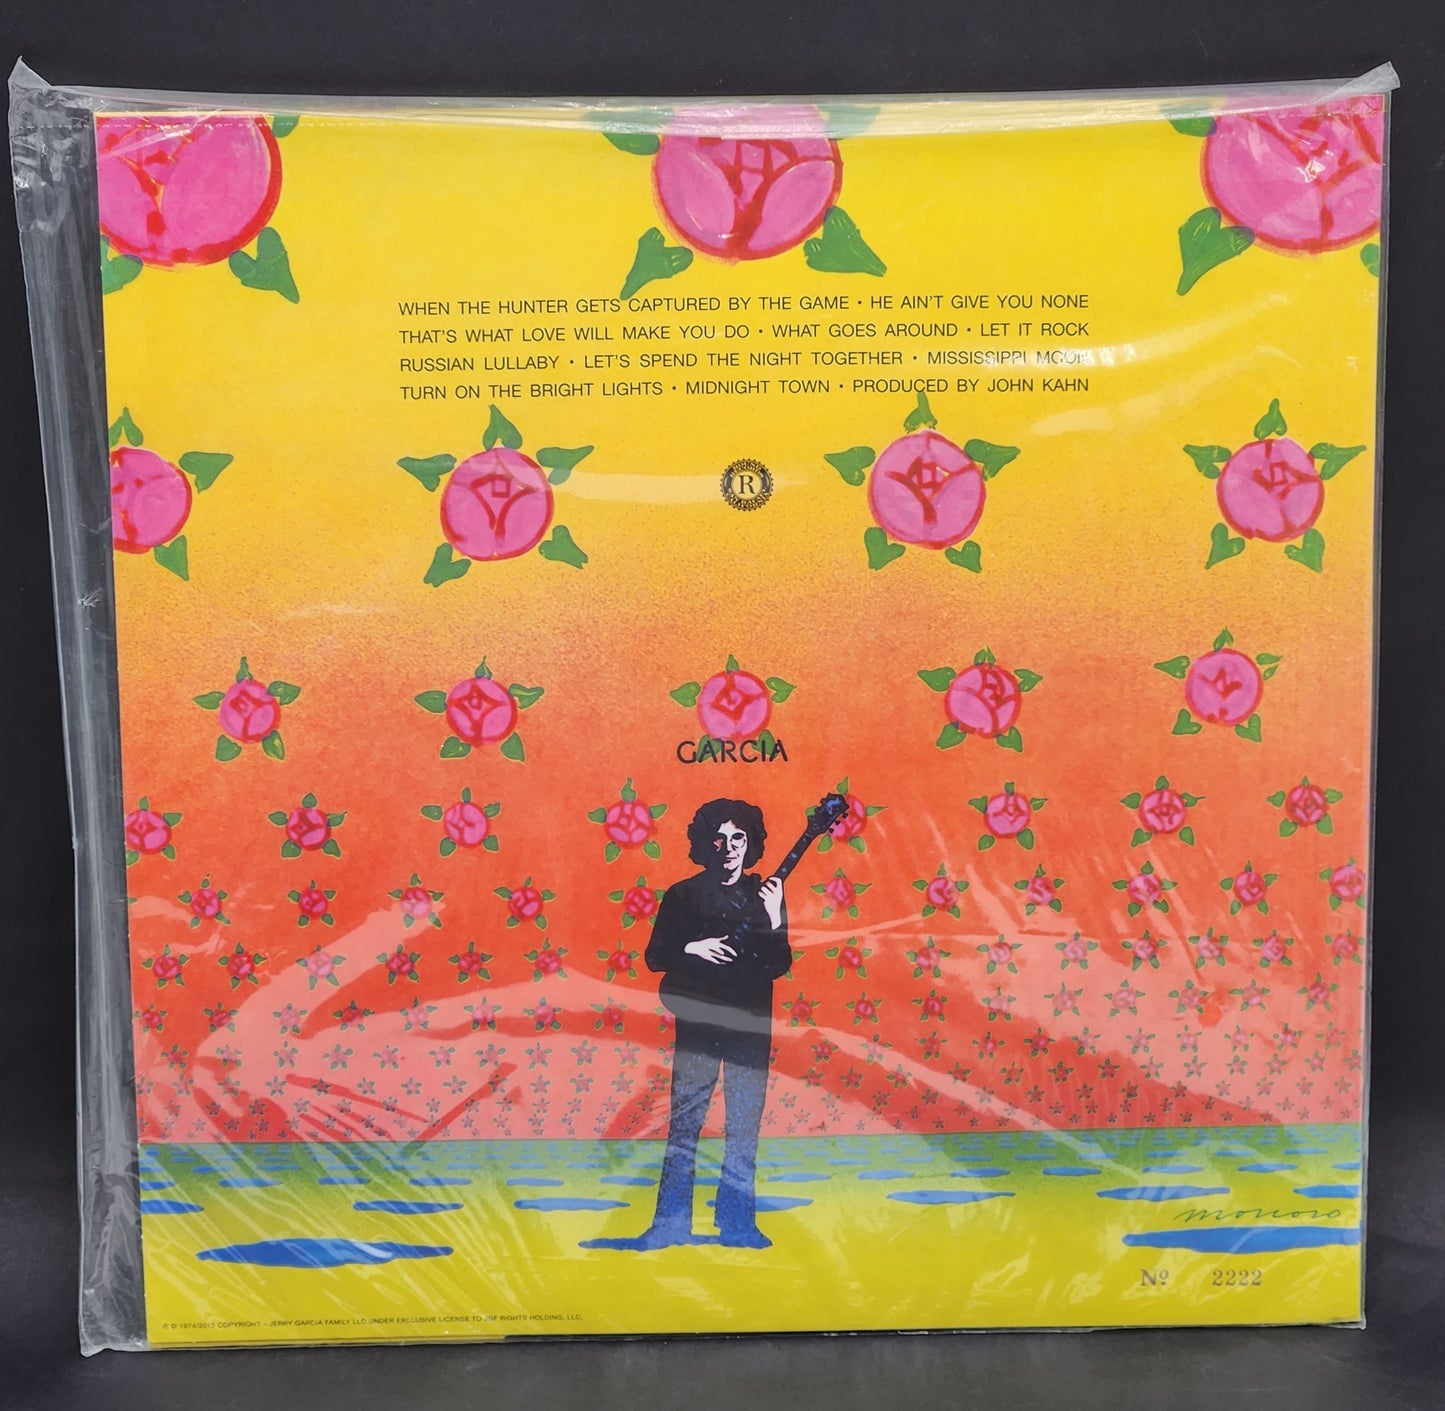 SEALED Jerry Garcia "Garcia (Compliments)" Folk Rock 2015 Limited Edition Record (Green Vinyl)